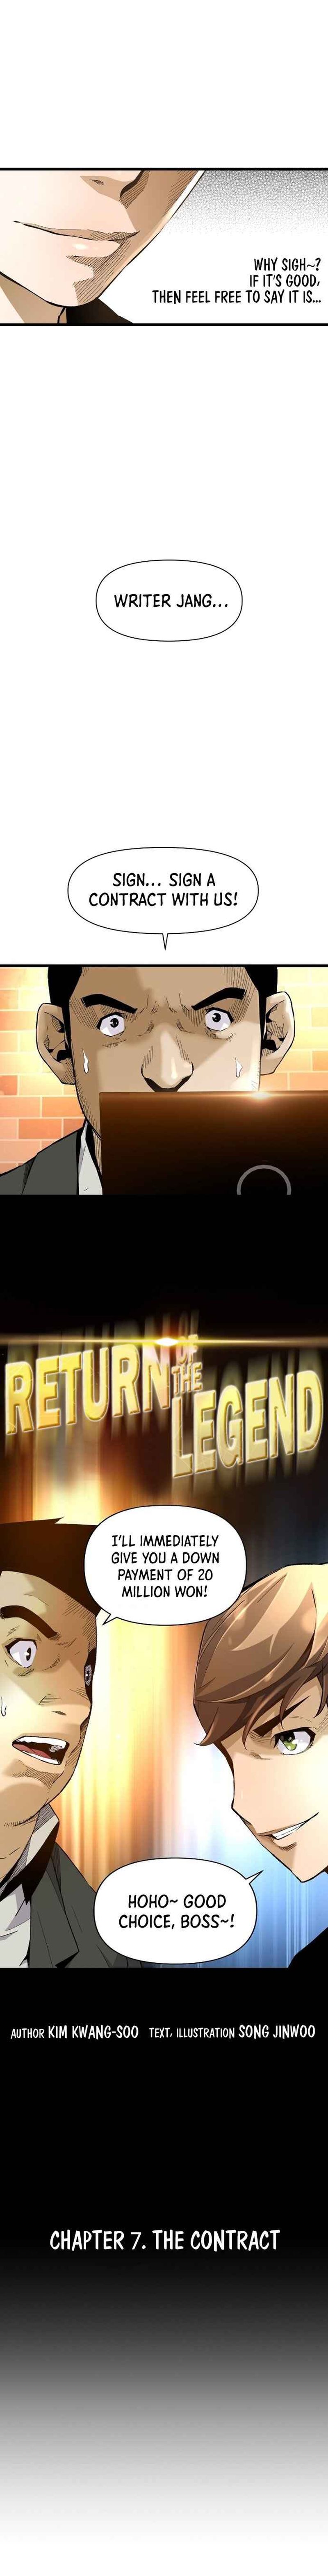 return_of_the_legend_7_2